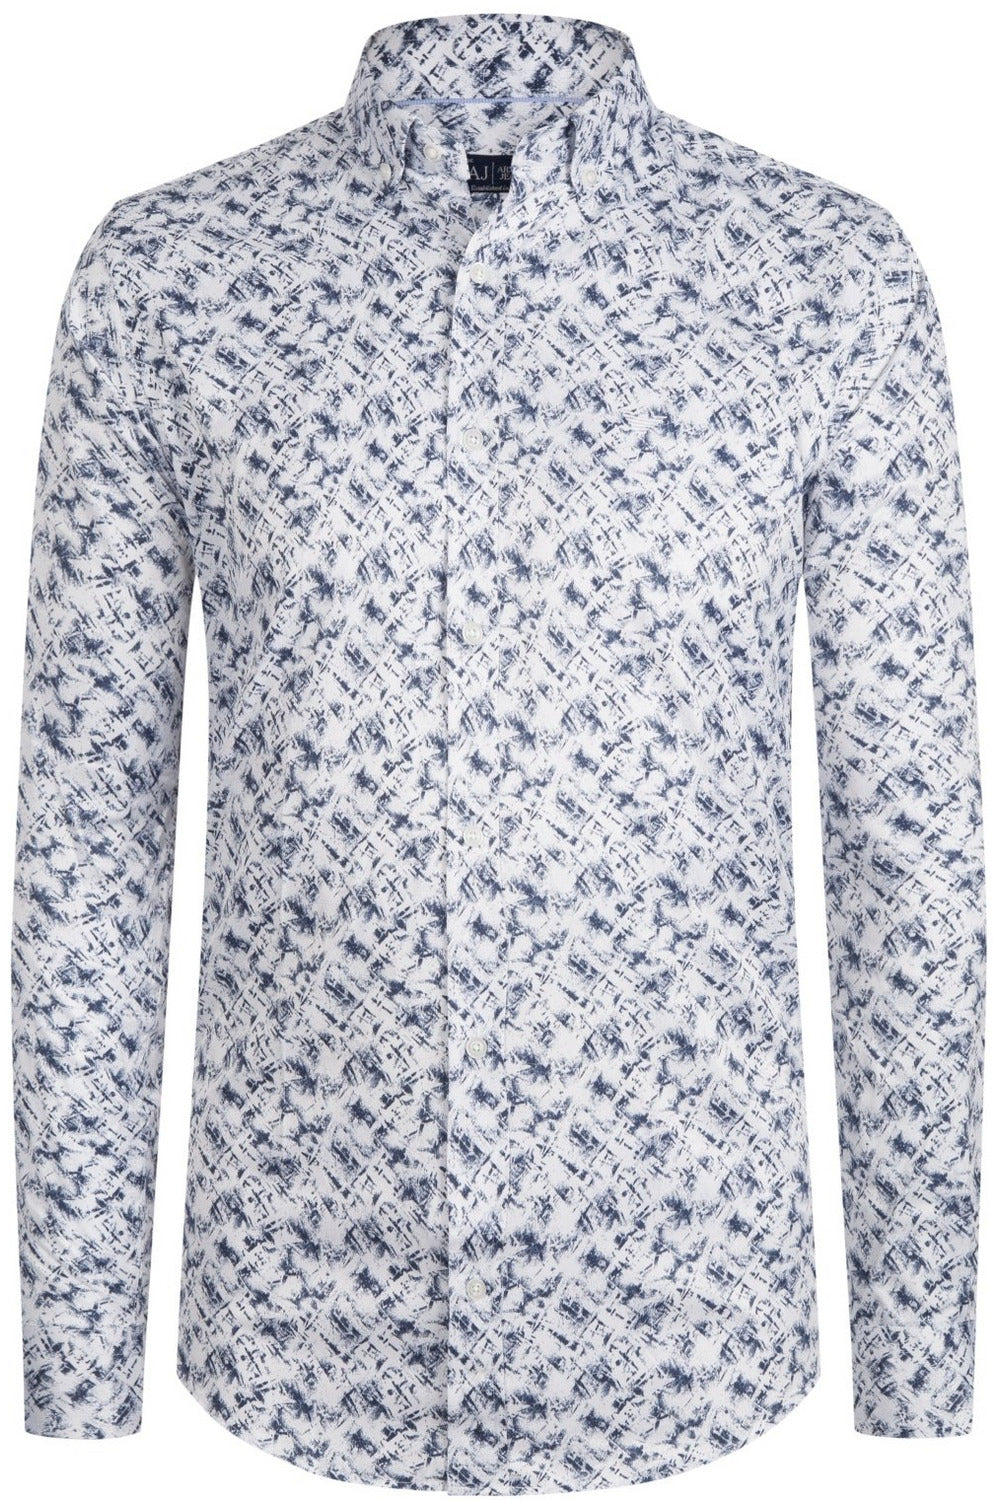 Armani Jeans Casual Shirt - Giltenergy